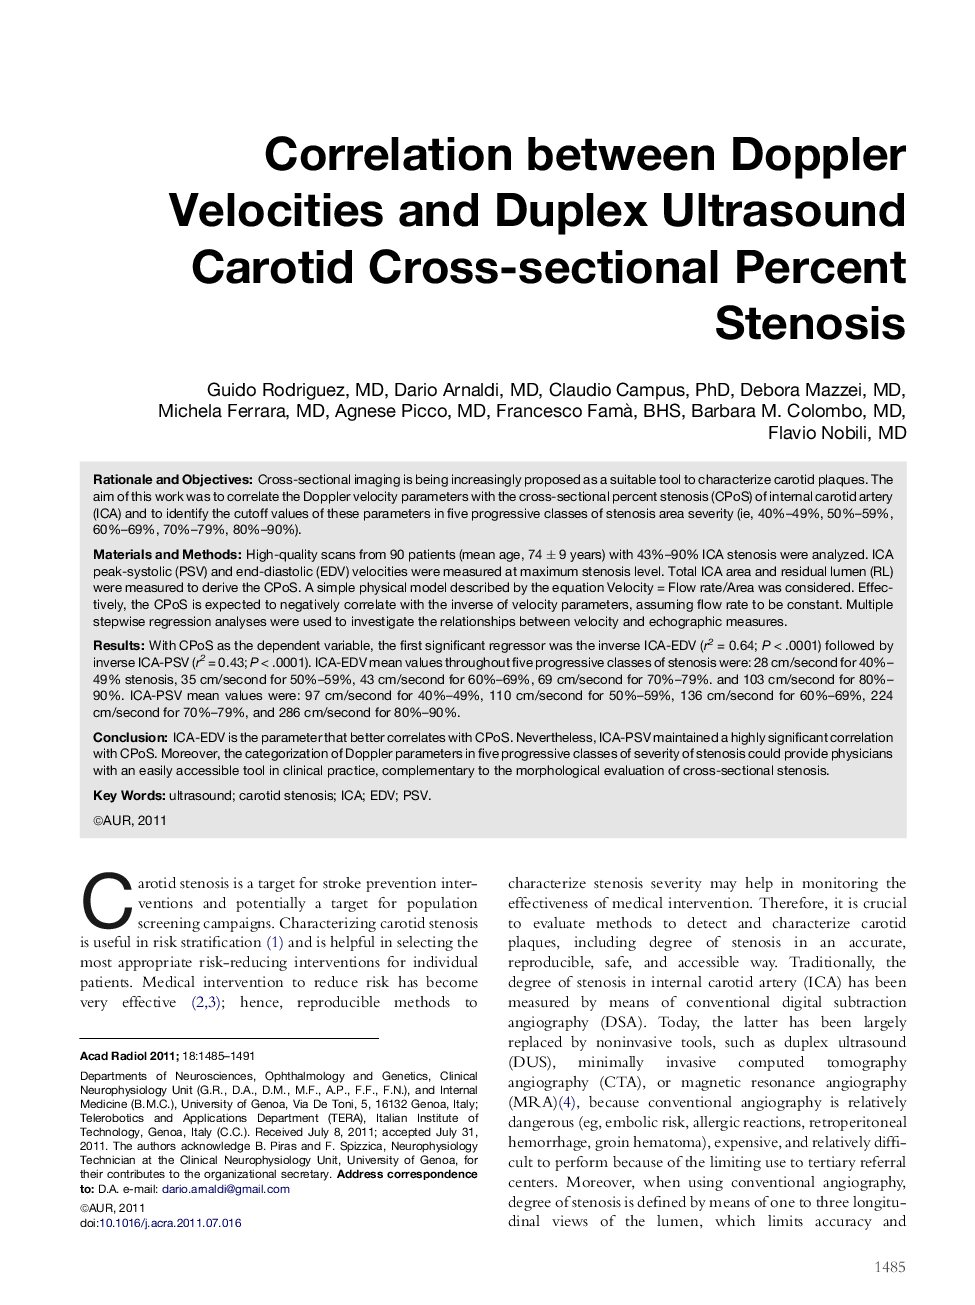 Correlation between Doppler Velocities and Duplex Ultrasound Carotid Cross-sectional Percent Stenosis